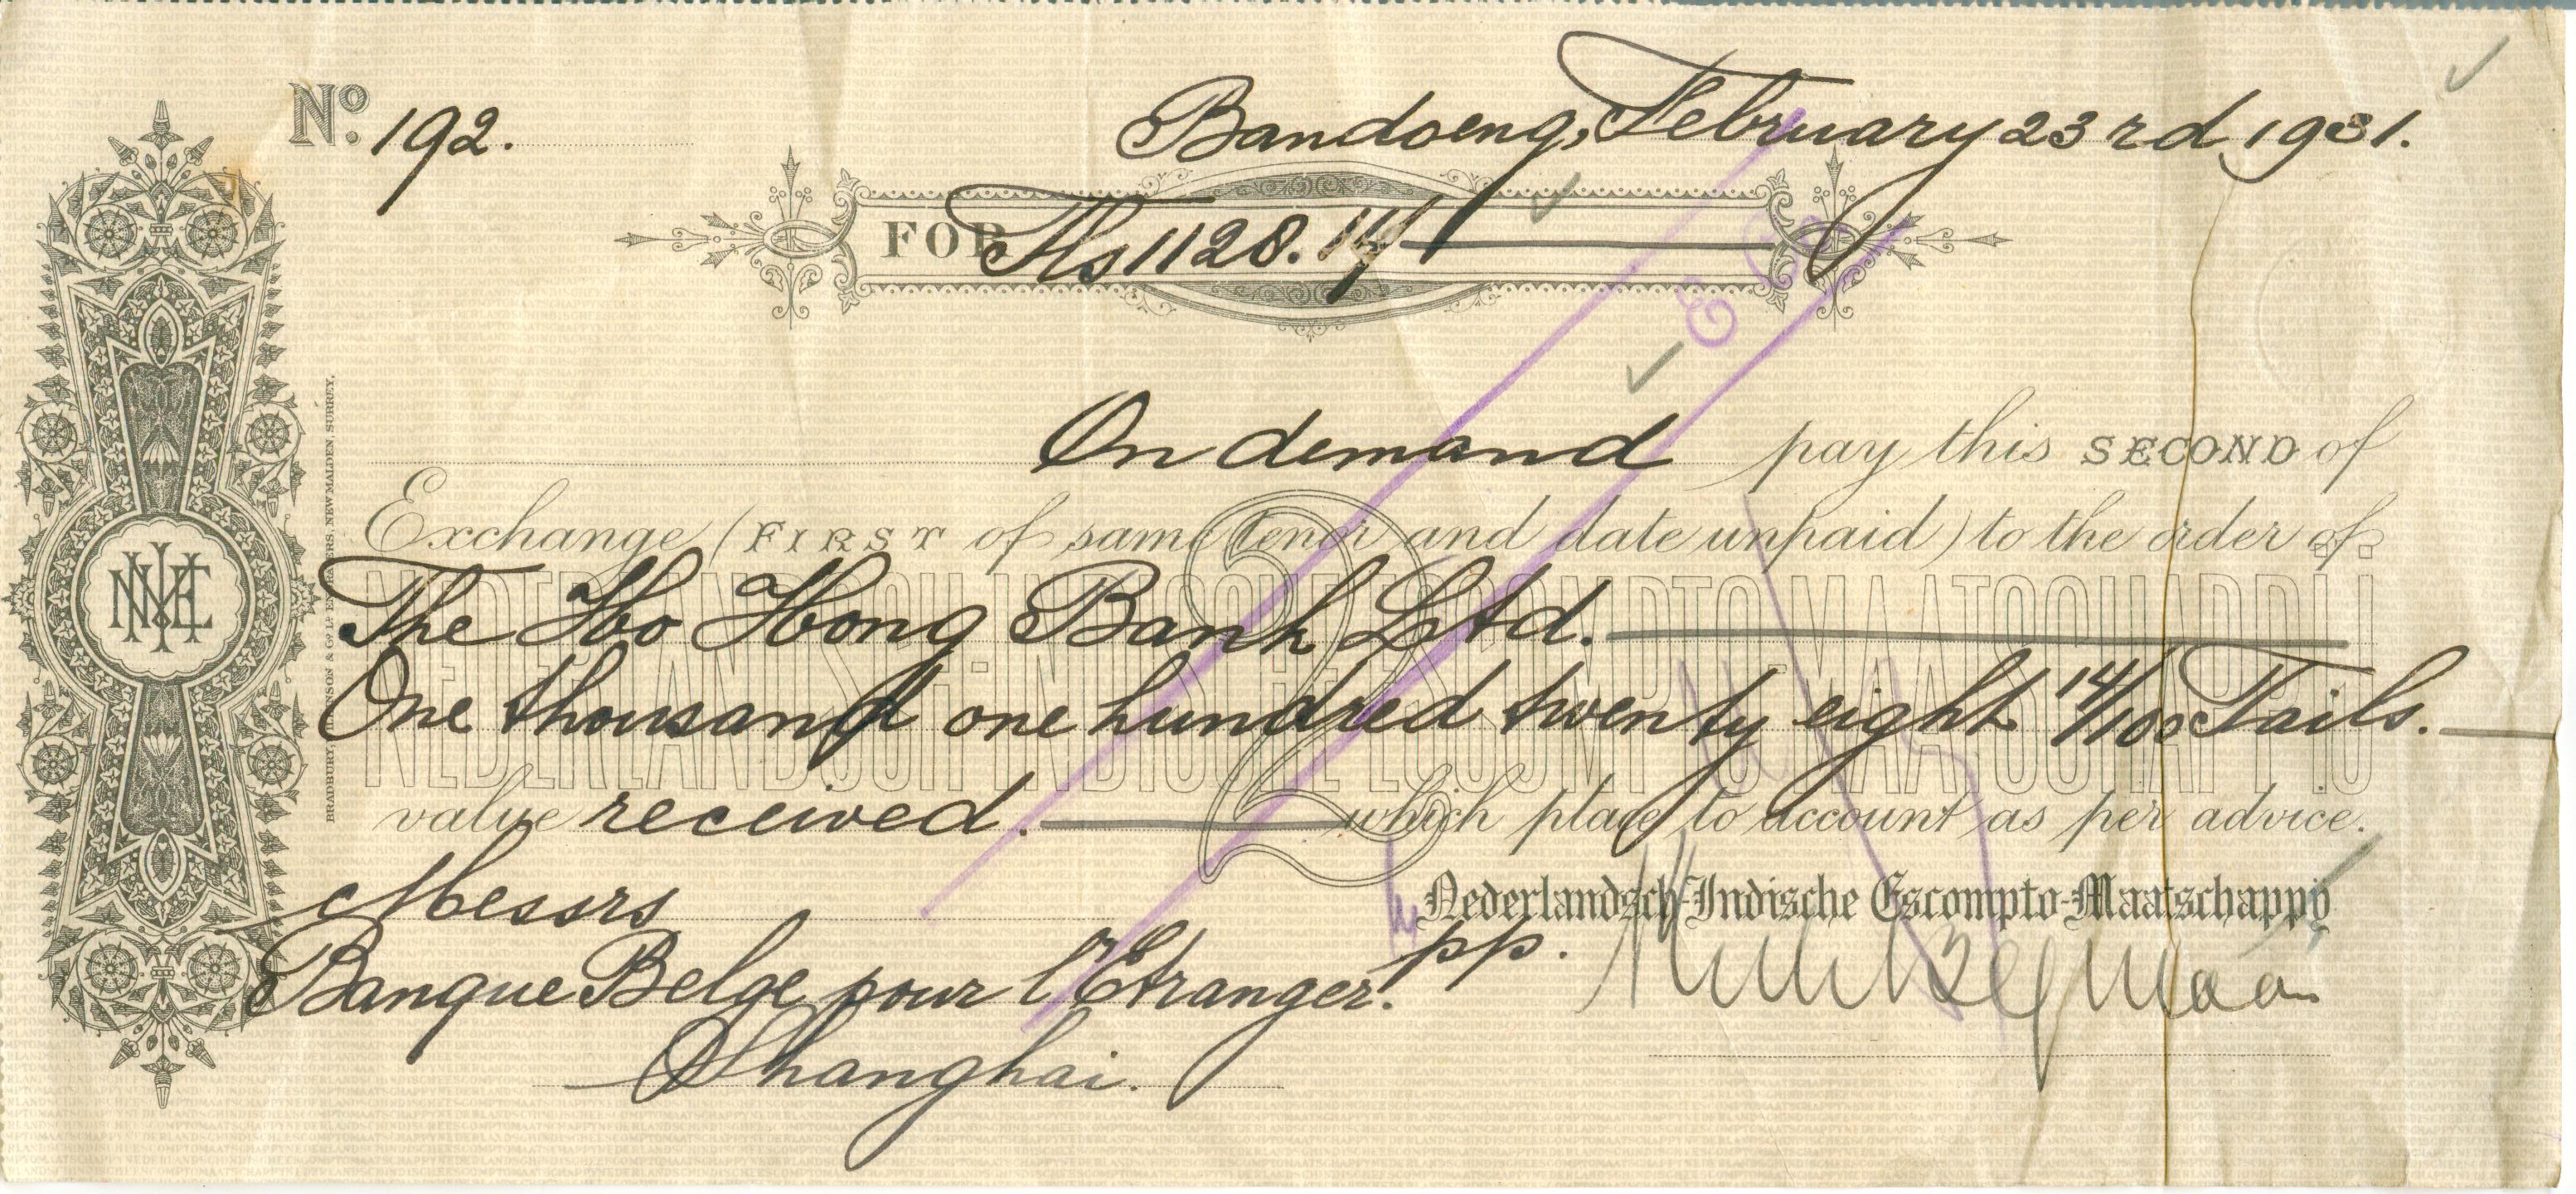 D2403, Check of Nederlandsch Indische Handels Bank, Shanghai, 1931